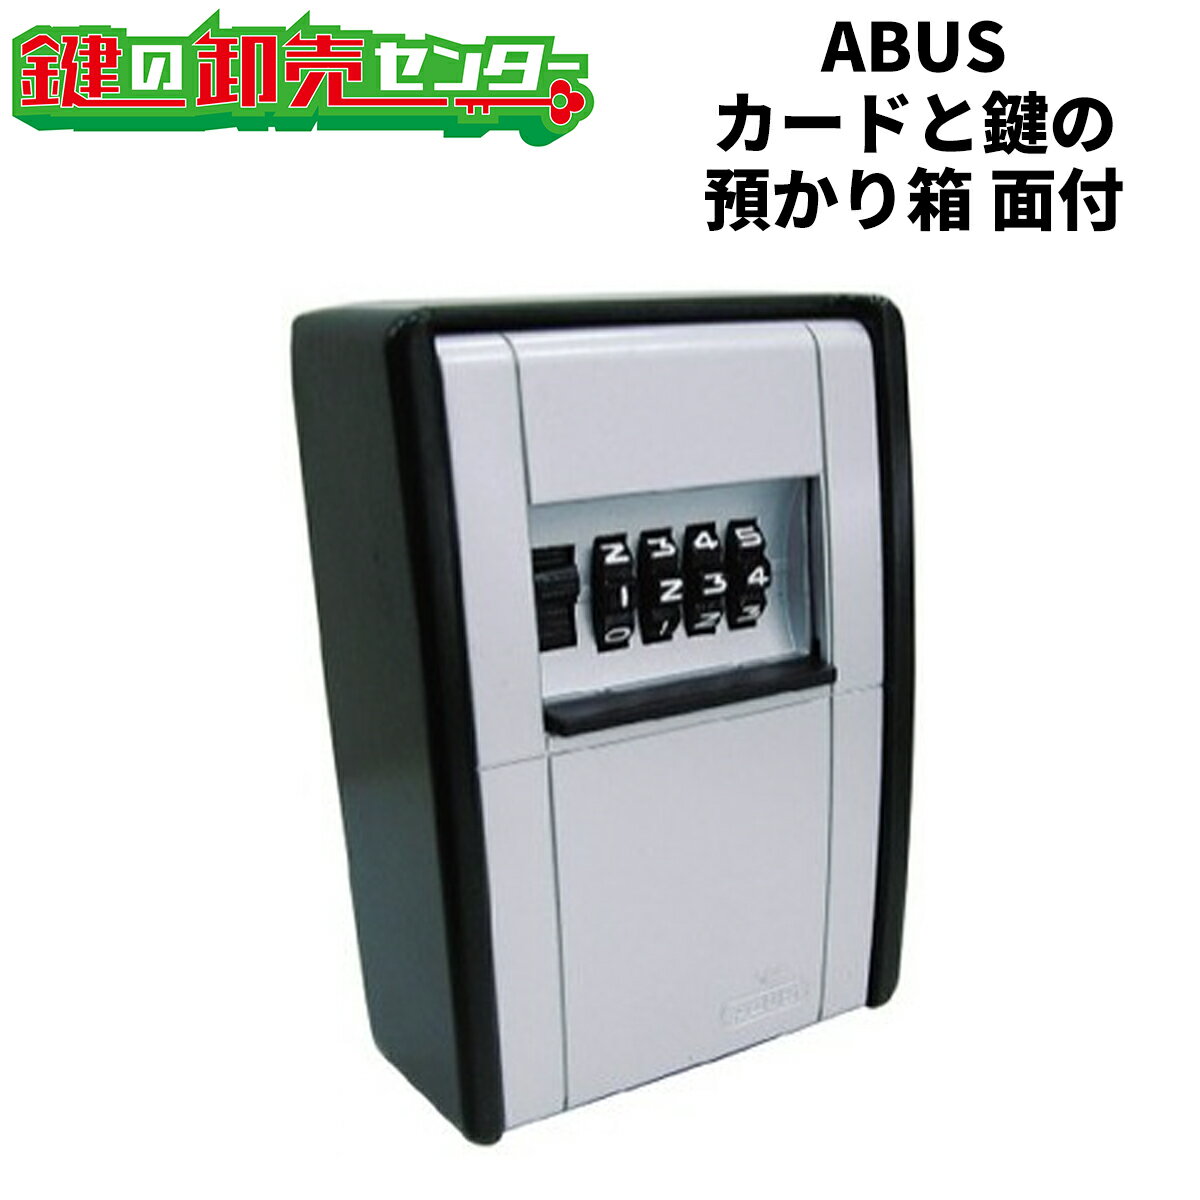 ABUS アバス カードとカギの預かり箱 面付 [AB-KG2-B] ●面付タイプ ●ダイヤル式 鍵(カギ) 交換 取替